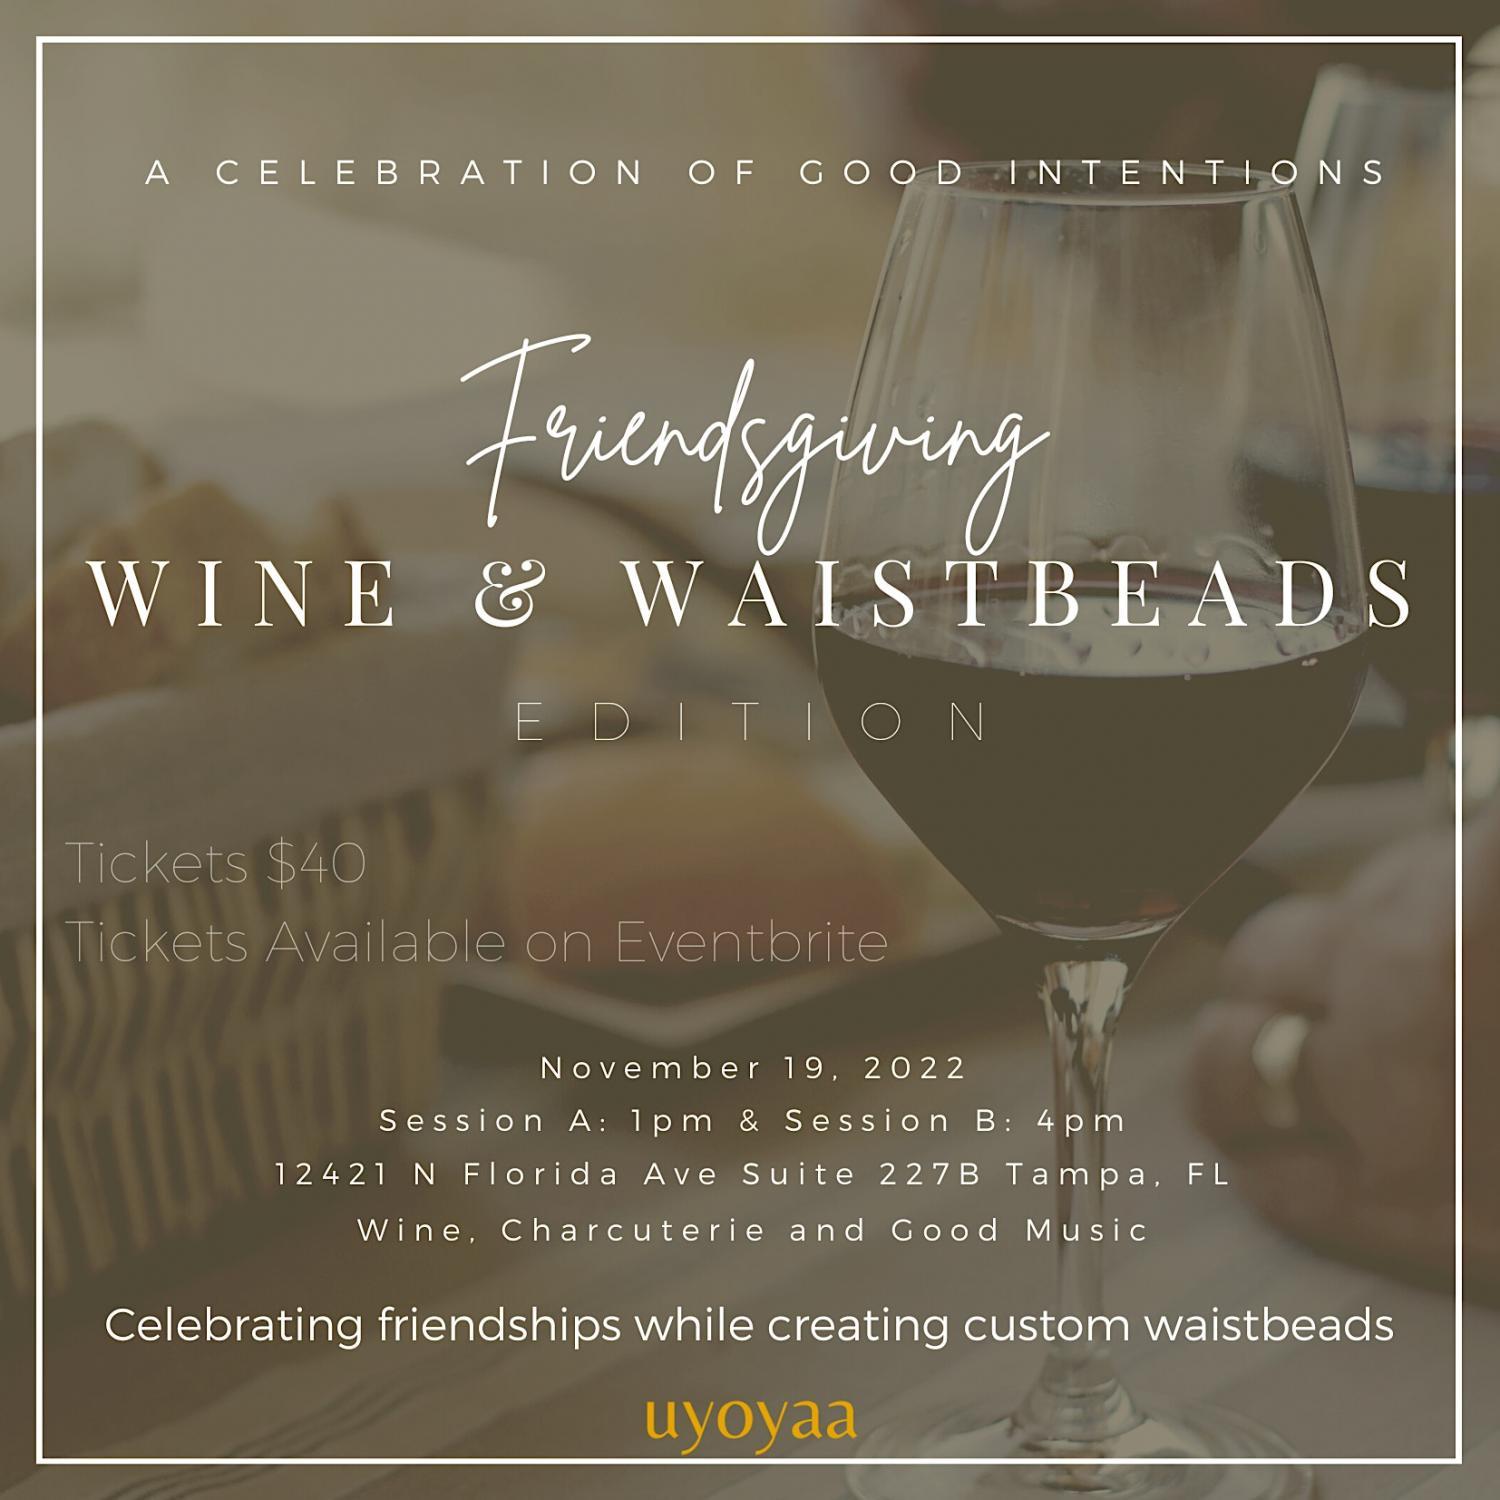 Friendsgiving Wine and Waistbead
Sat Nov 19, 7:00 PM - Sat Nov 19, 7:00 PM
in 15 days